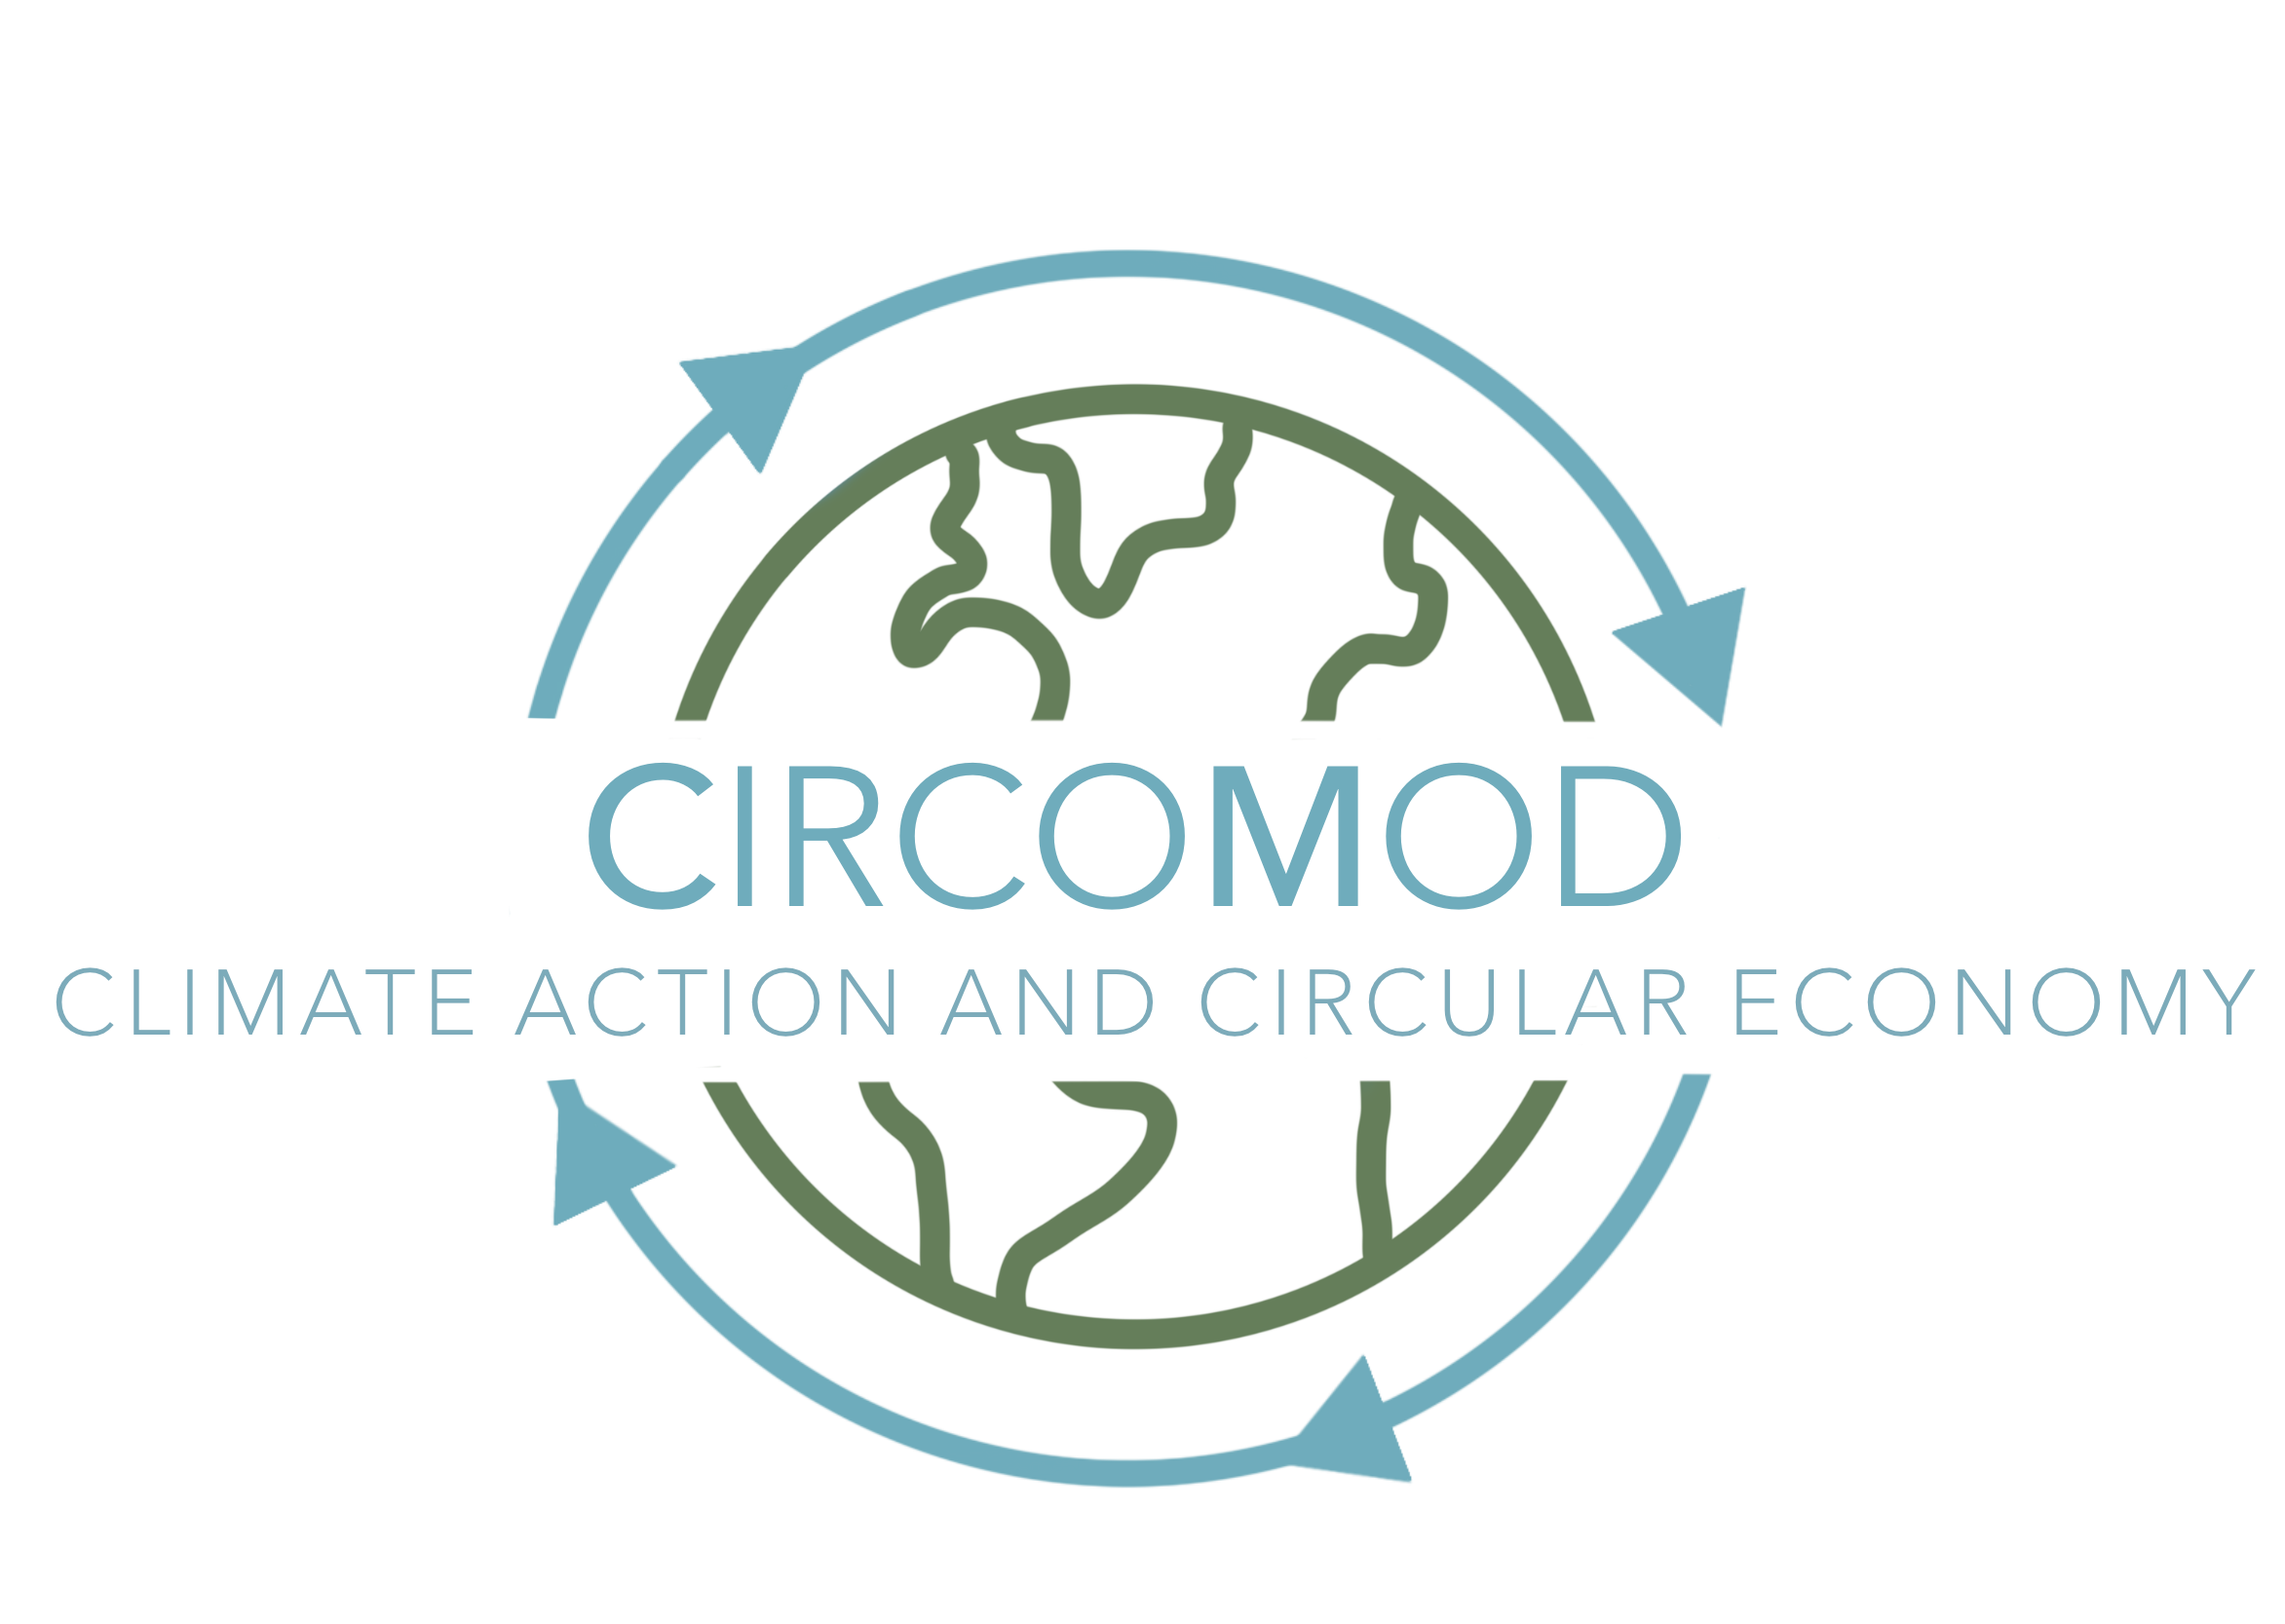 A new logo for the Circular Economy!